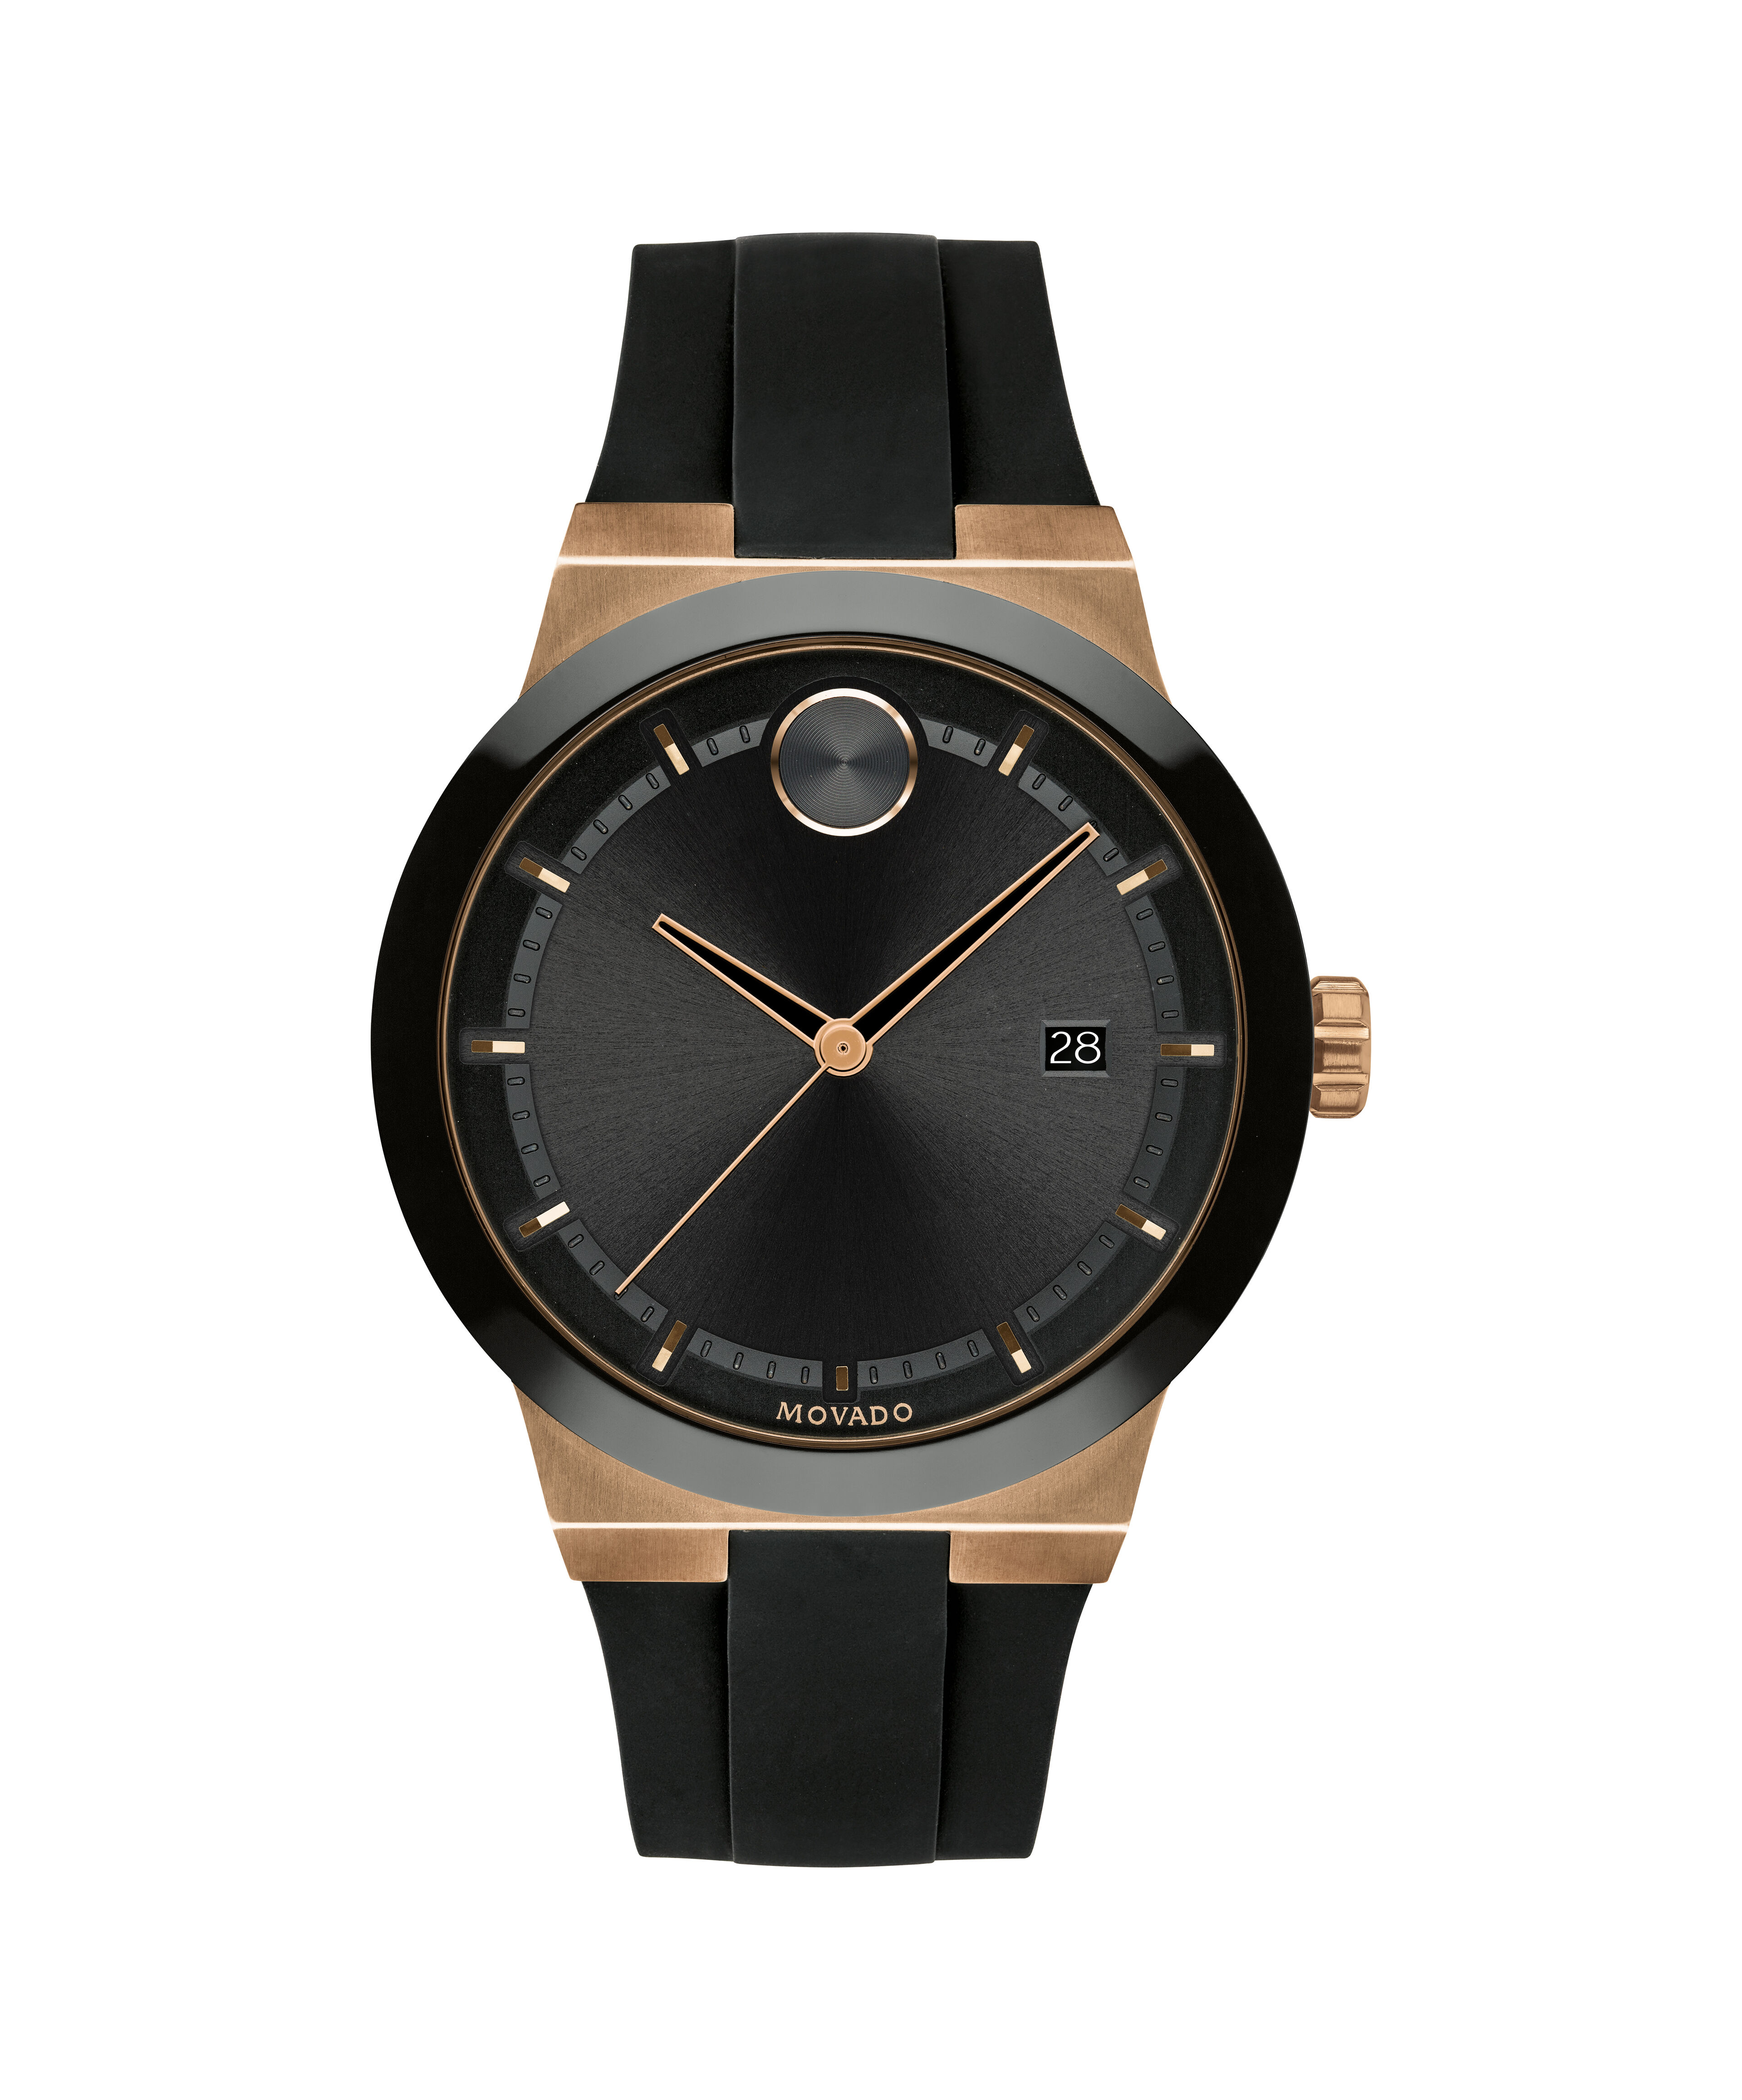 Quality Replica Watches Amazon